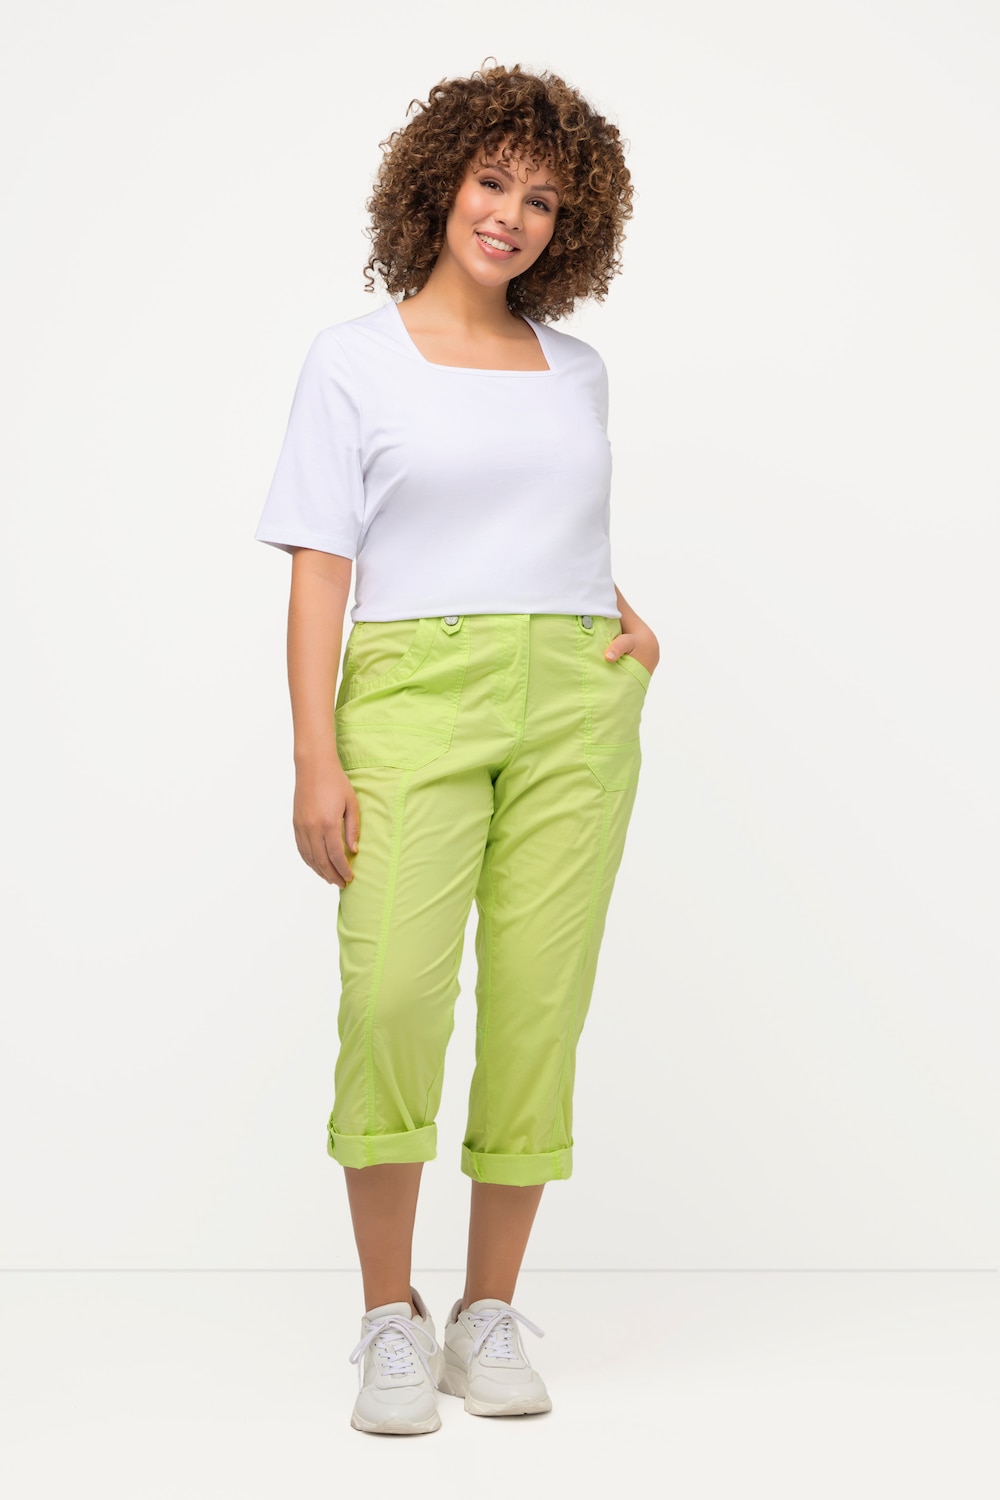 grandes tailles pantalon cargo 7/8 avec attaches, femmes, vert, taille: 62, coton, ulla popken